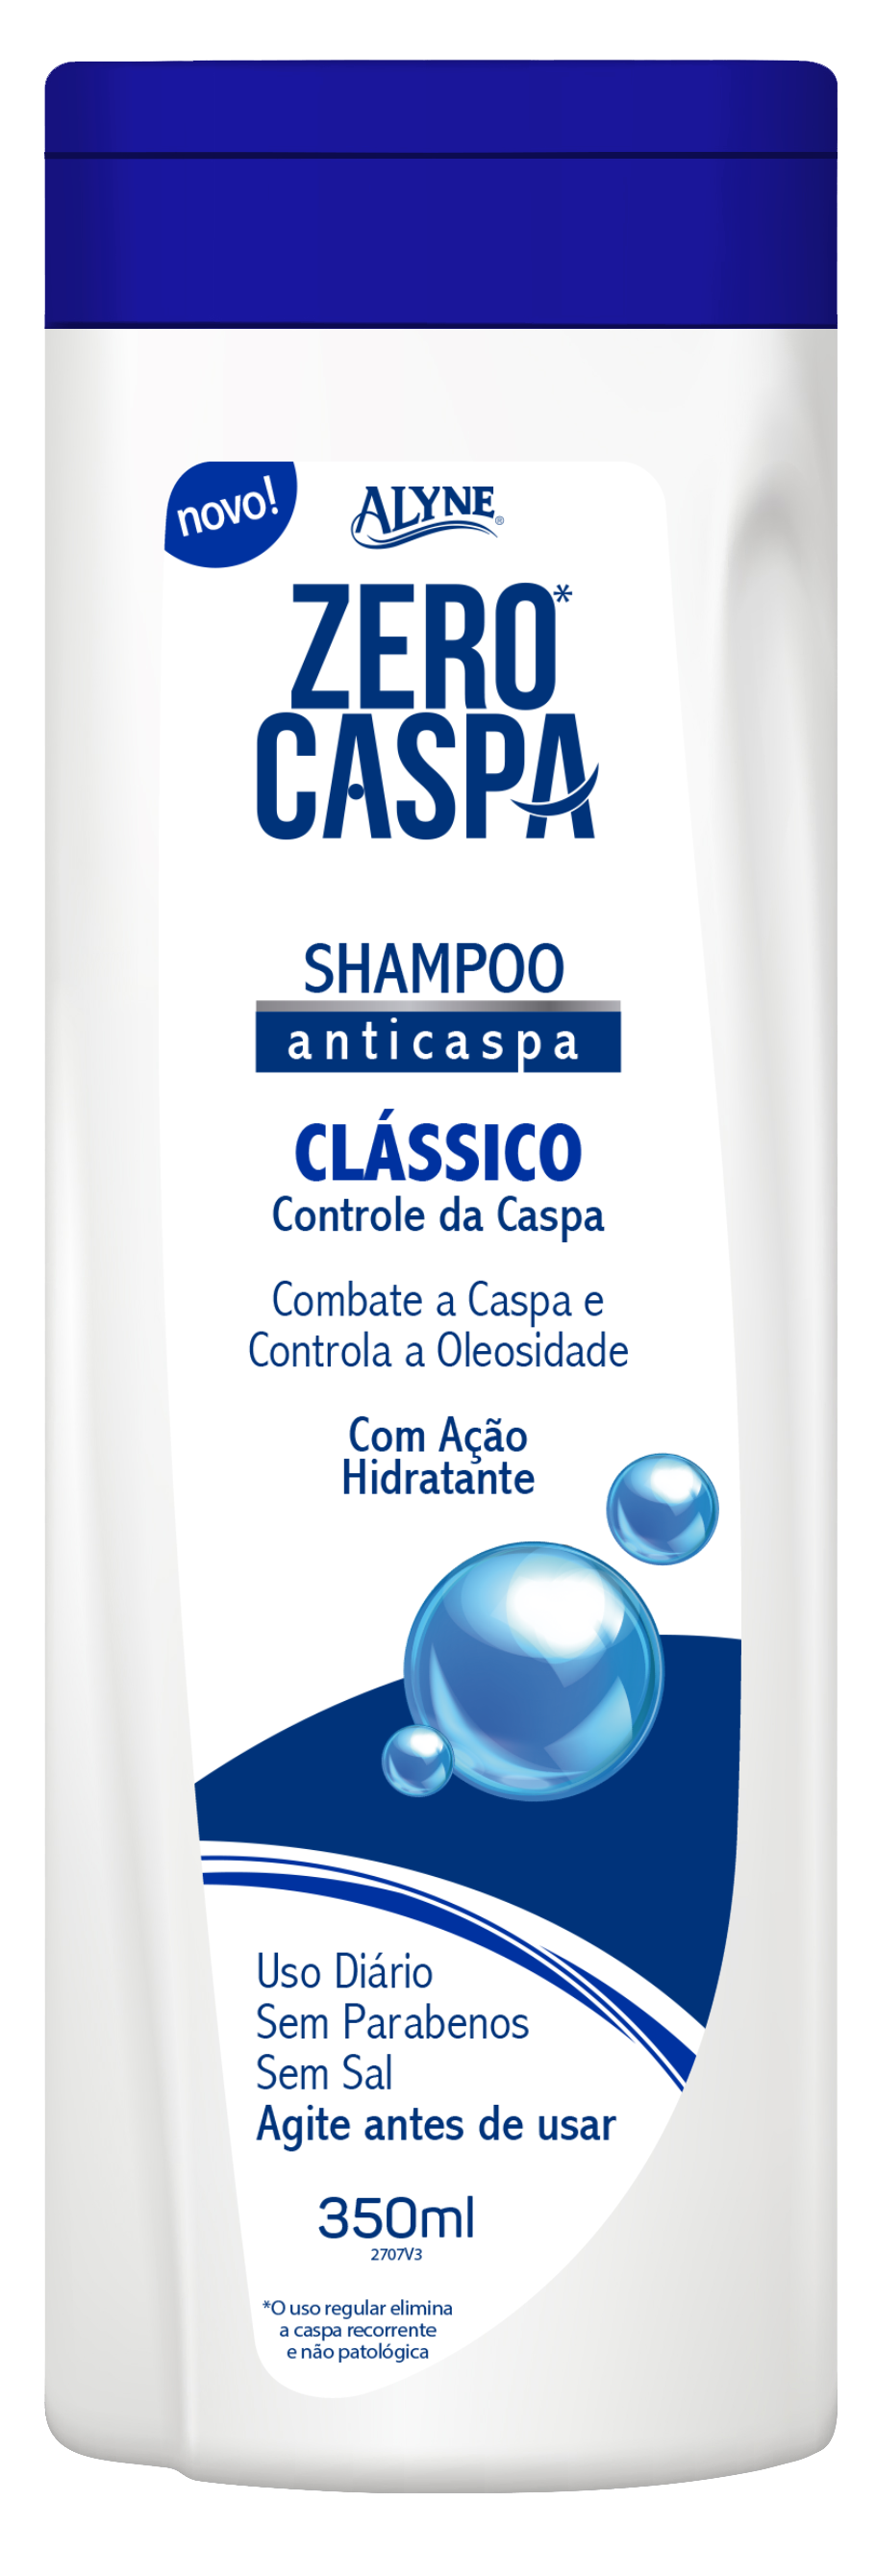 Shampoo Alyne Zero Caspa Detox Refrescante 350ml